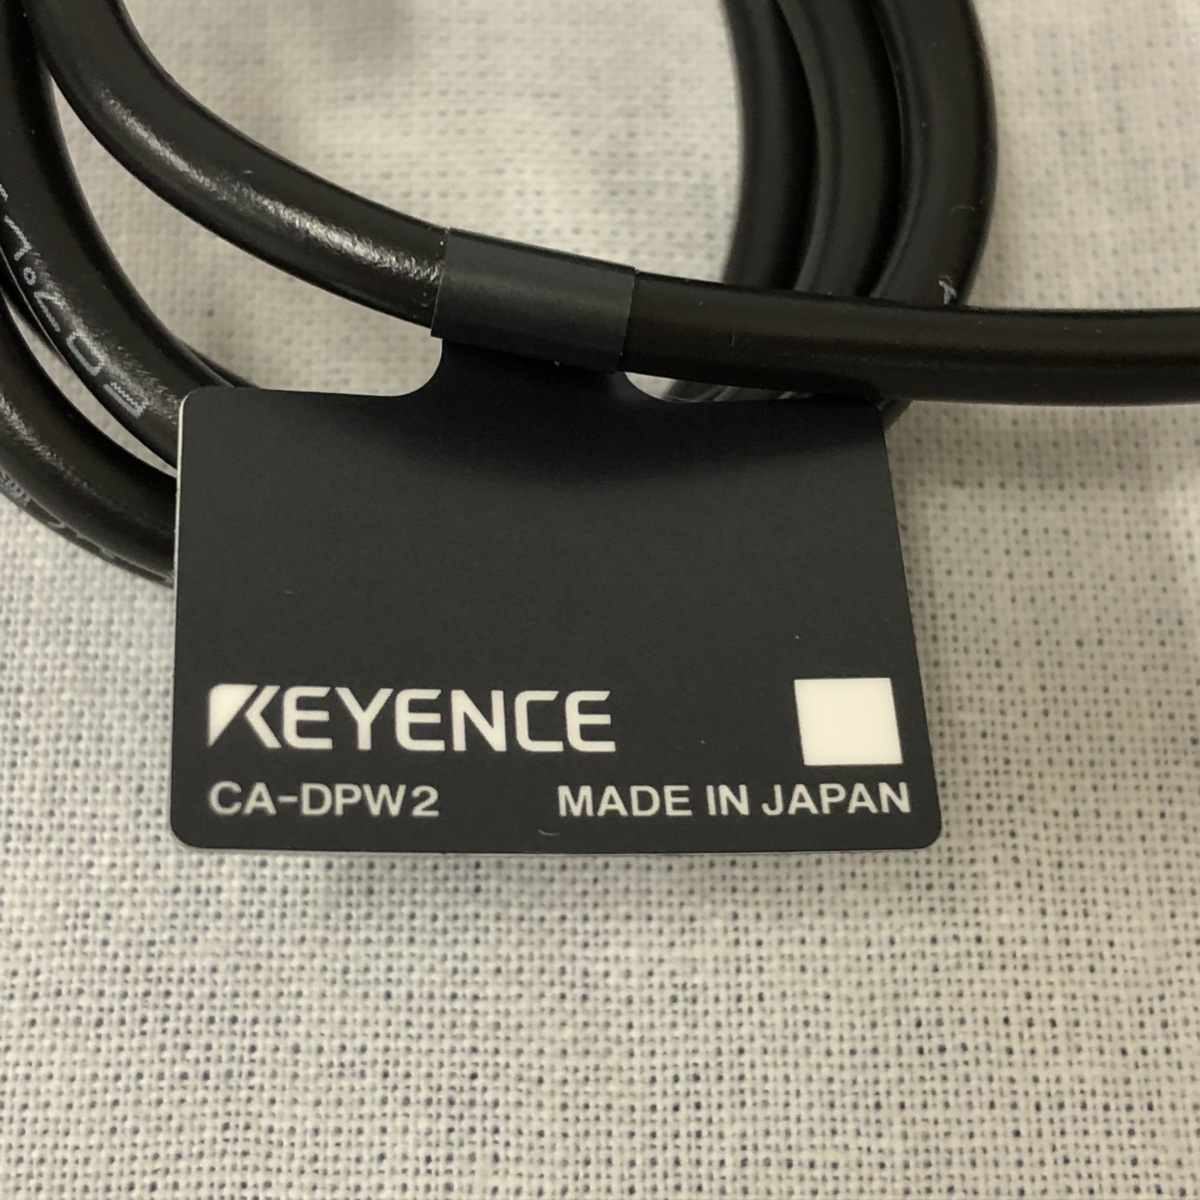 KEYENCE 画像処理システム XG-8000シリーズ XGシリーズ用デジタル高速500万画素白黒カメラ XG-H500M CA-DPW2 CA-DPU2  WD110 2.0X